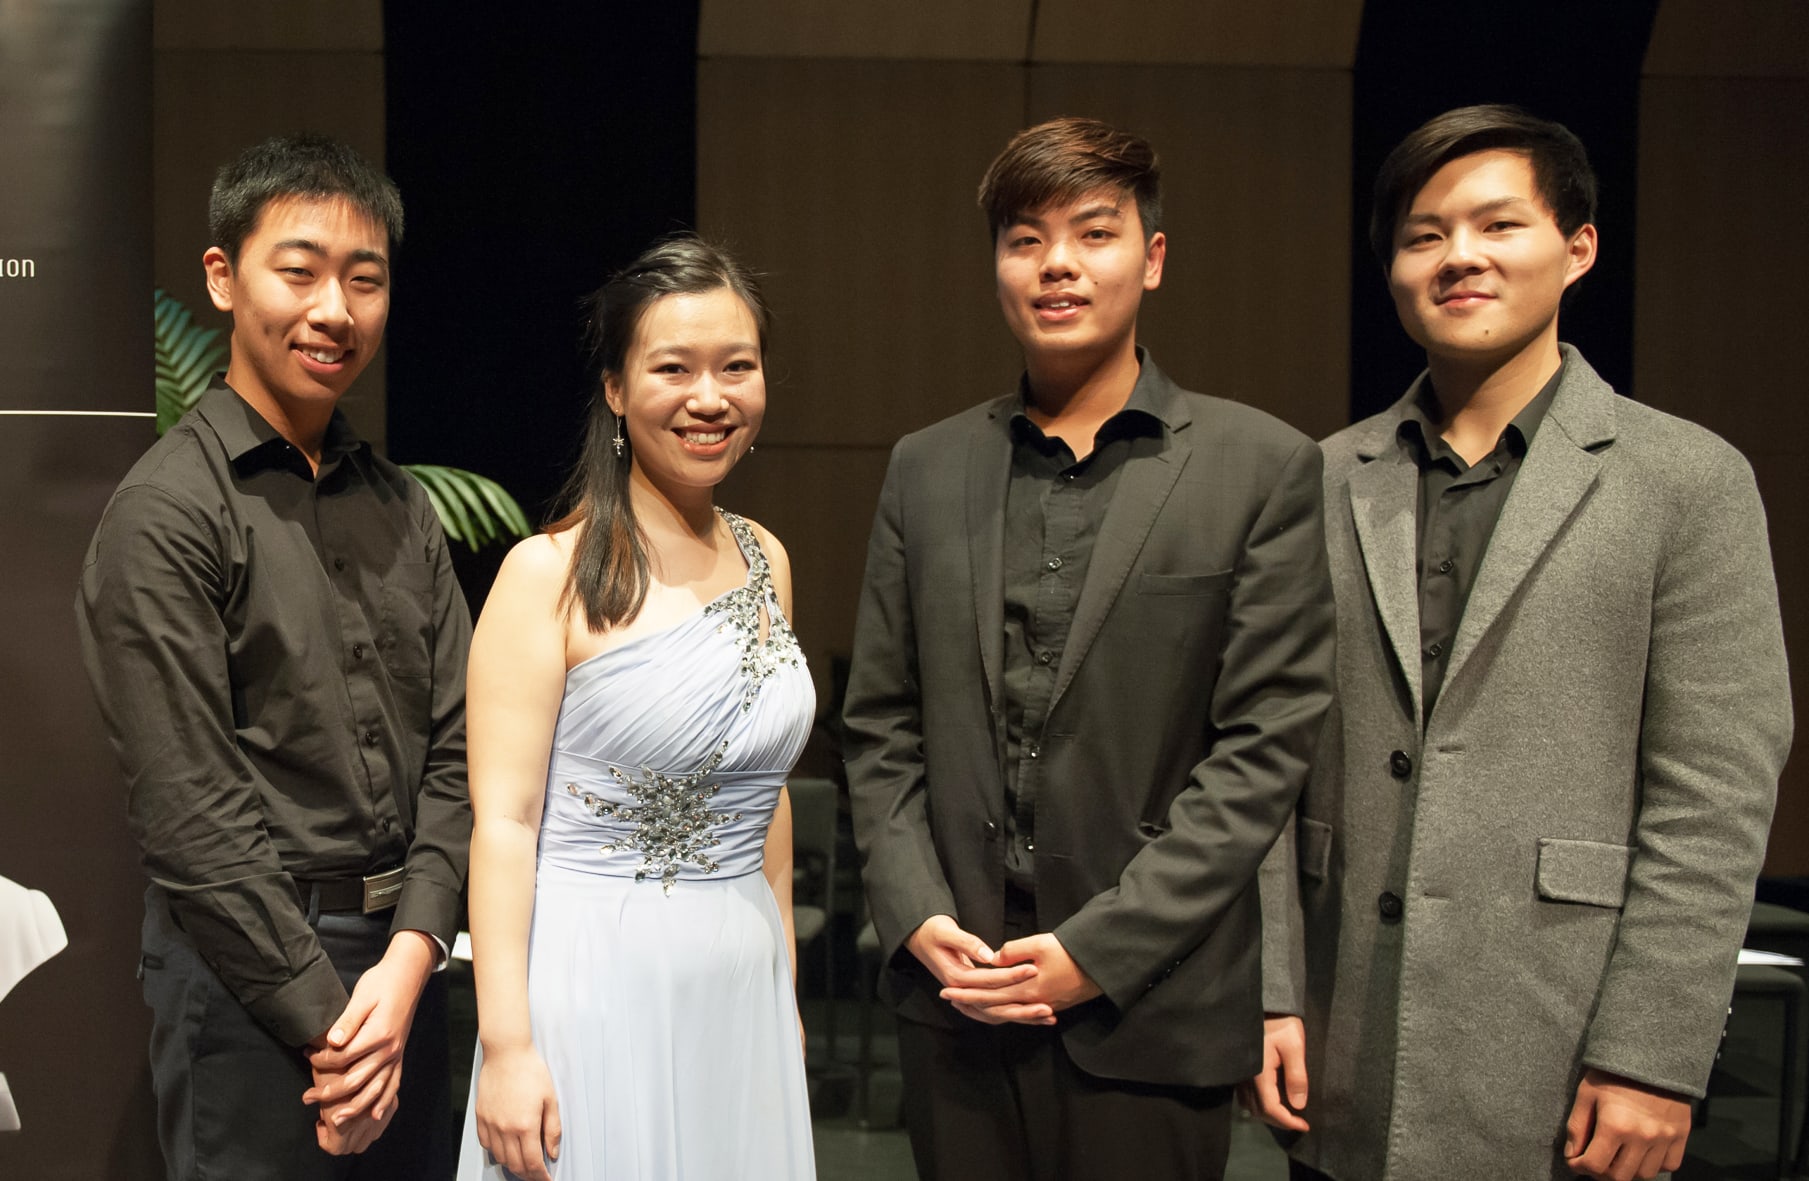 WNPC 2019 finalists: Henry Meng, Siyu Sun, Tony Yan Tong Chen, Frank Chen